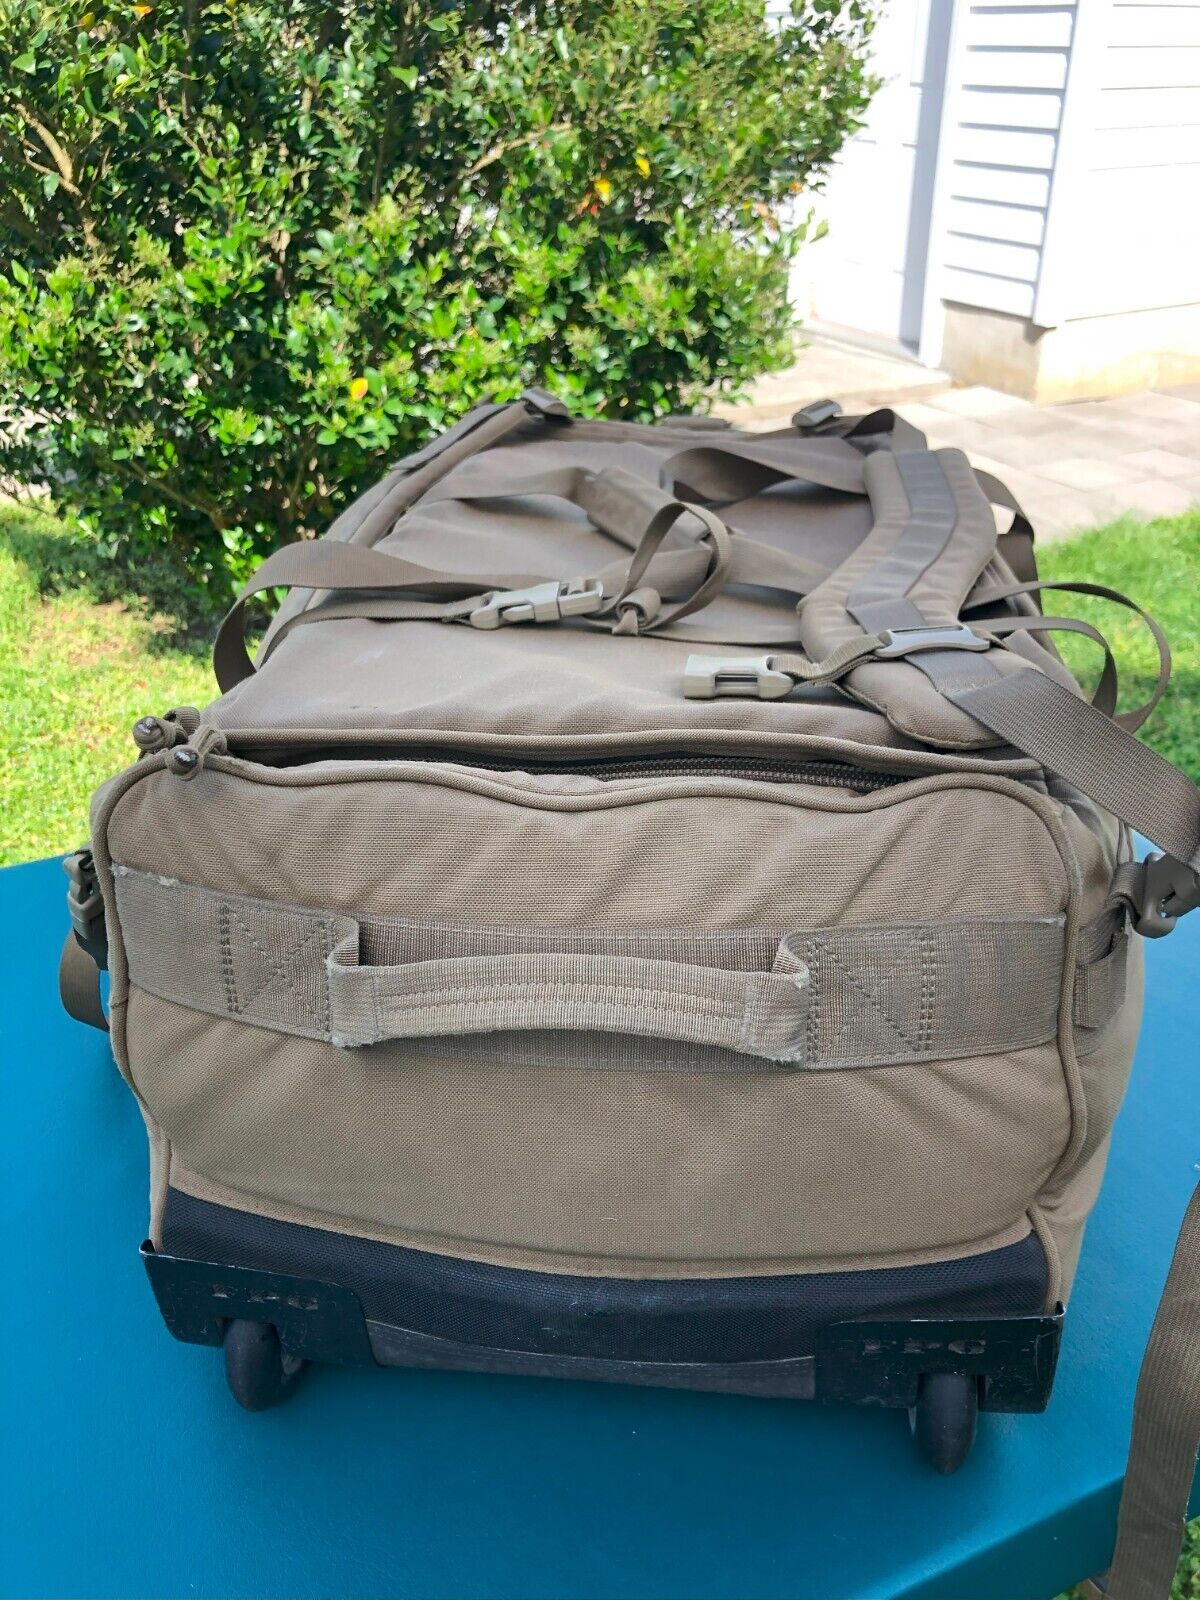 USMC Force Protector Deployment Bag - US Marine Corps Military Coyote Travel Bag